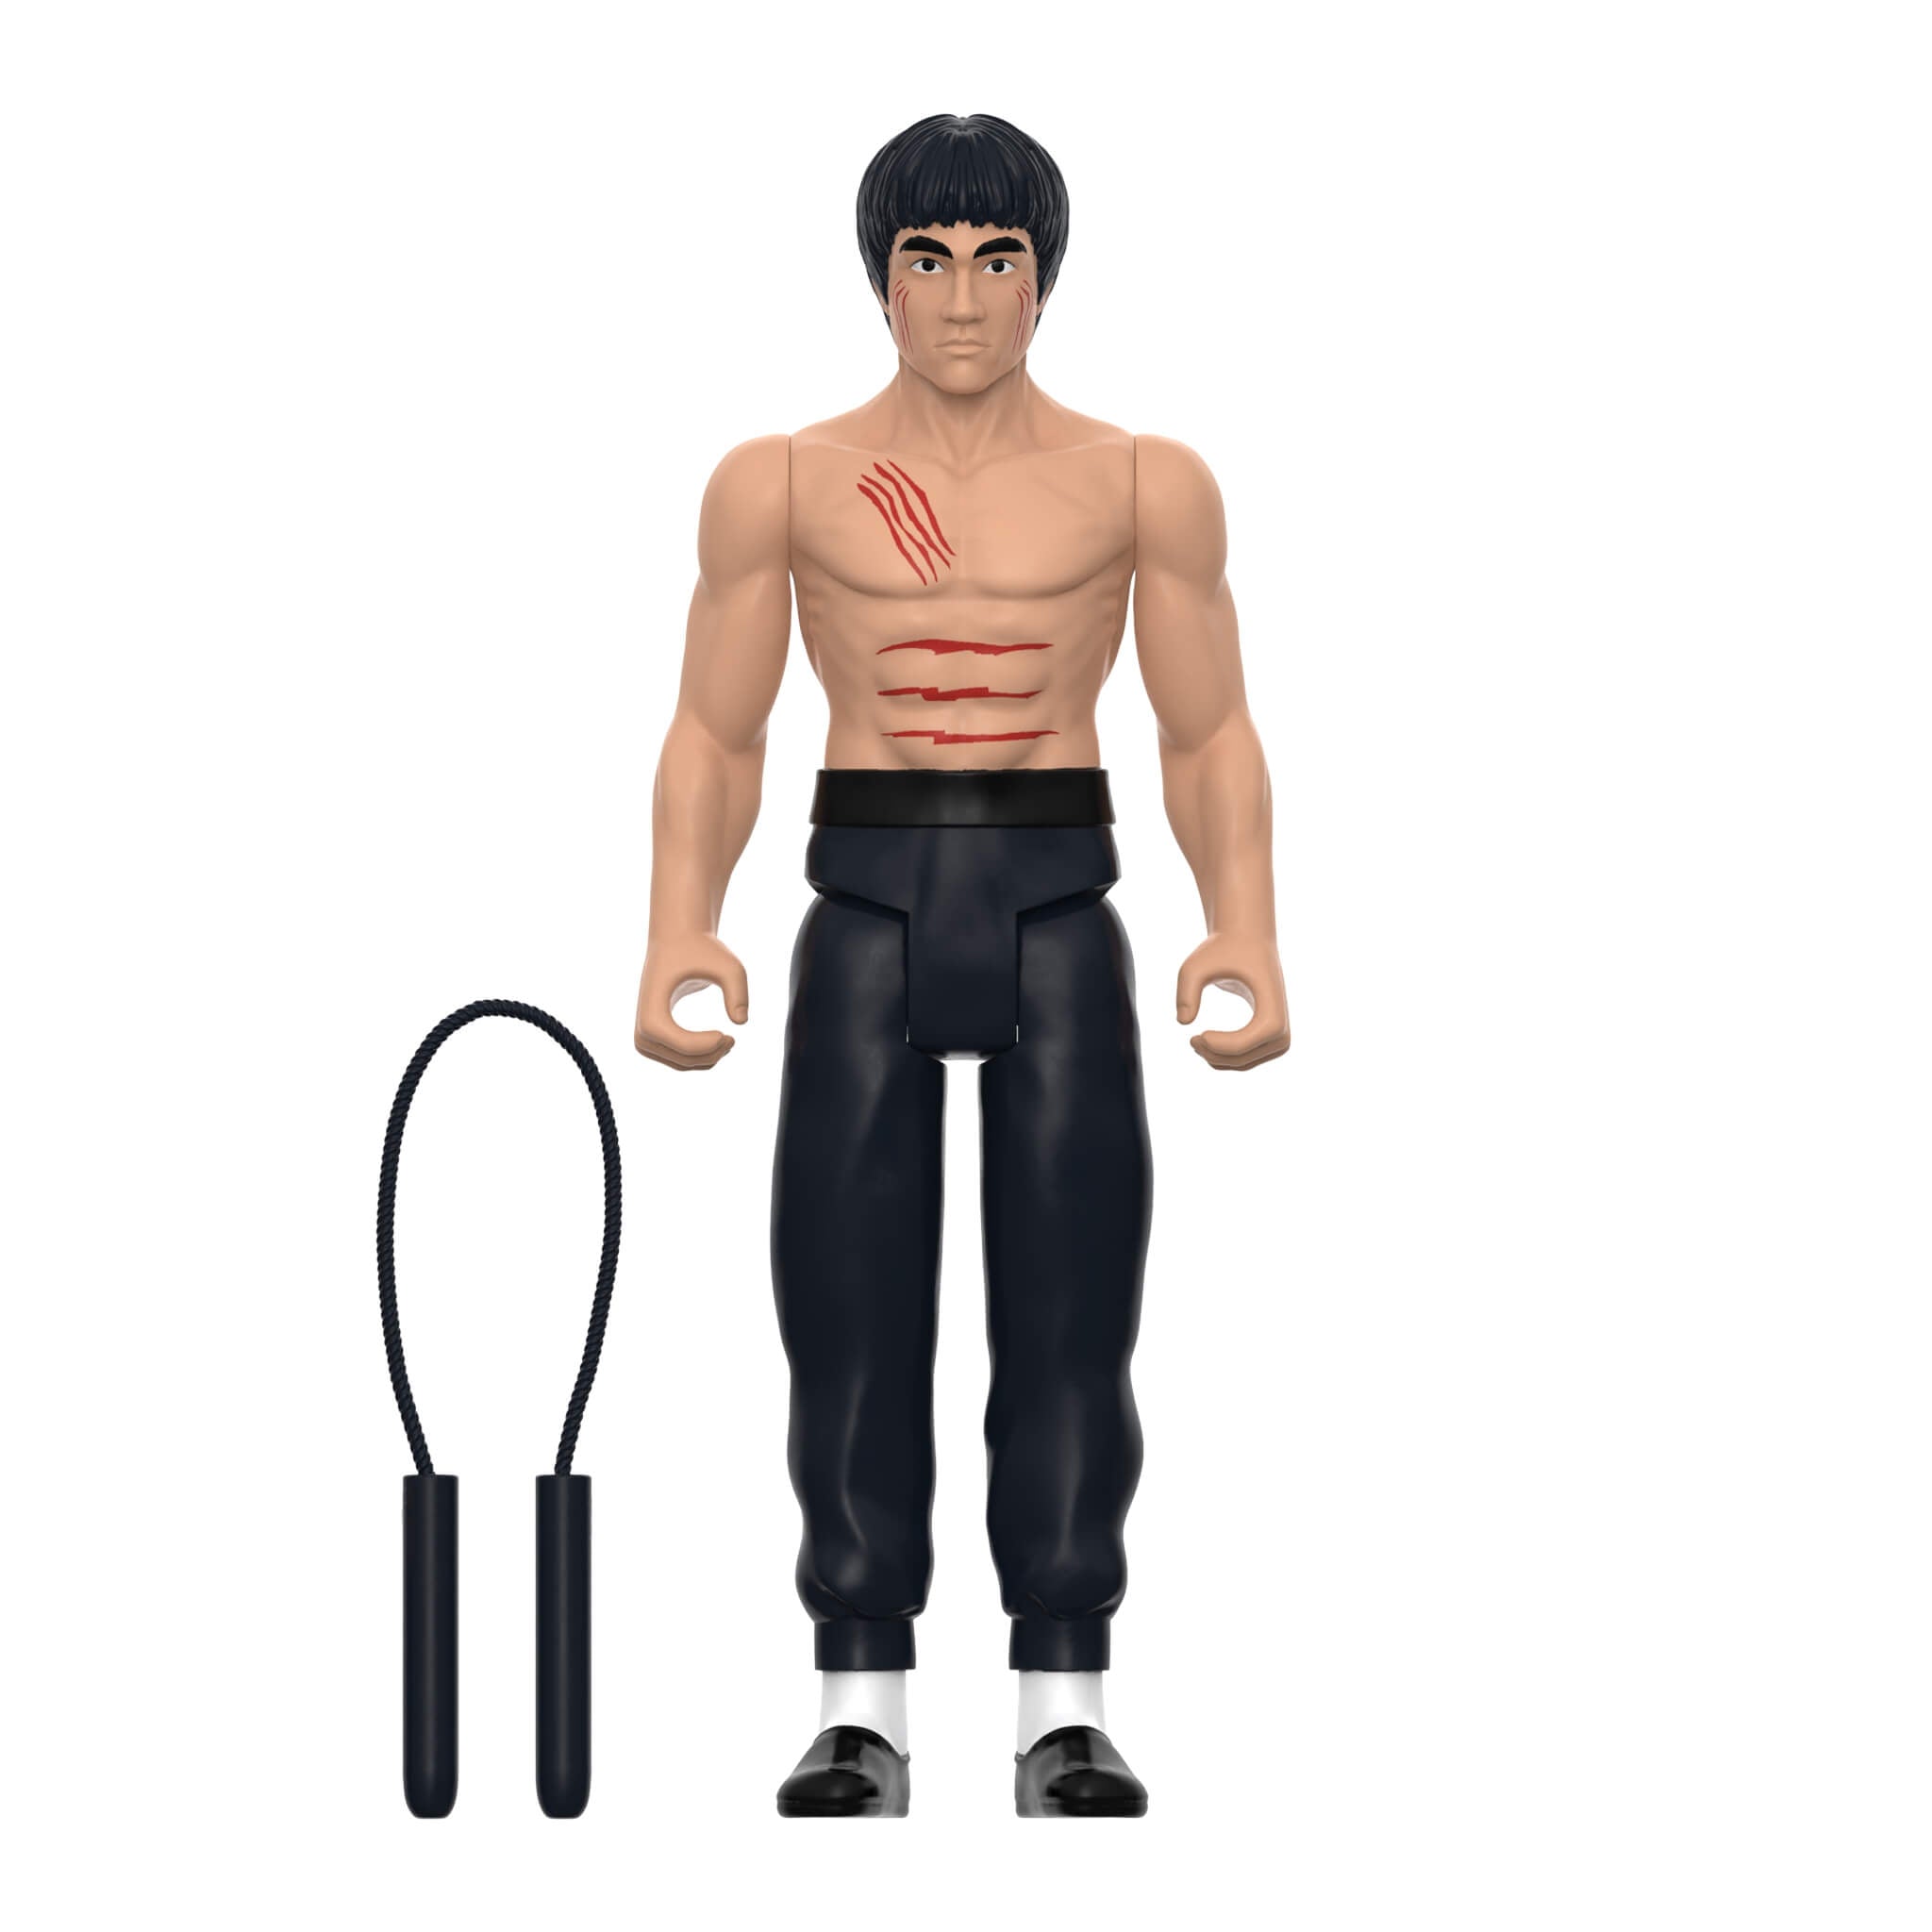 Bruce Lee ReAction Figure Wave 1 - Bruce Lee (The Warrior)